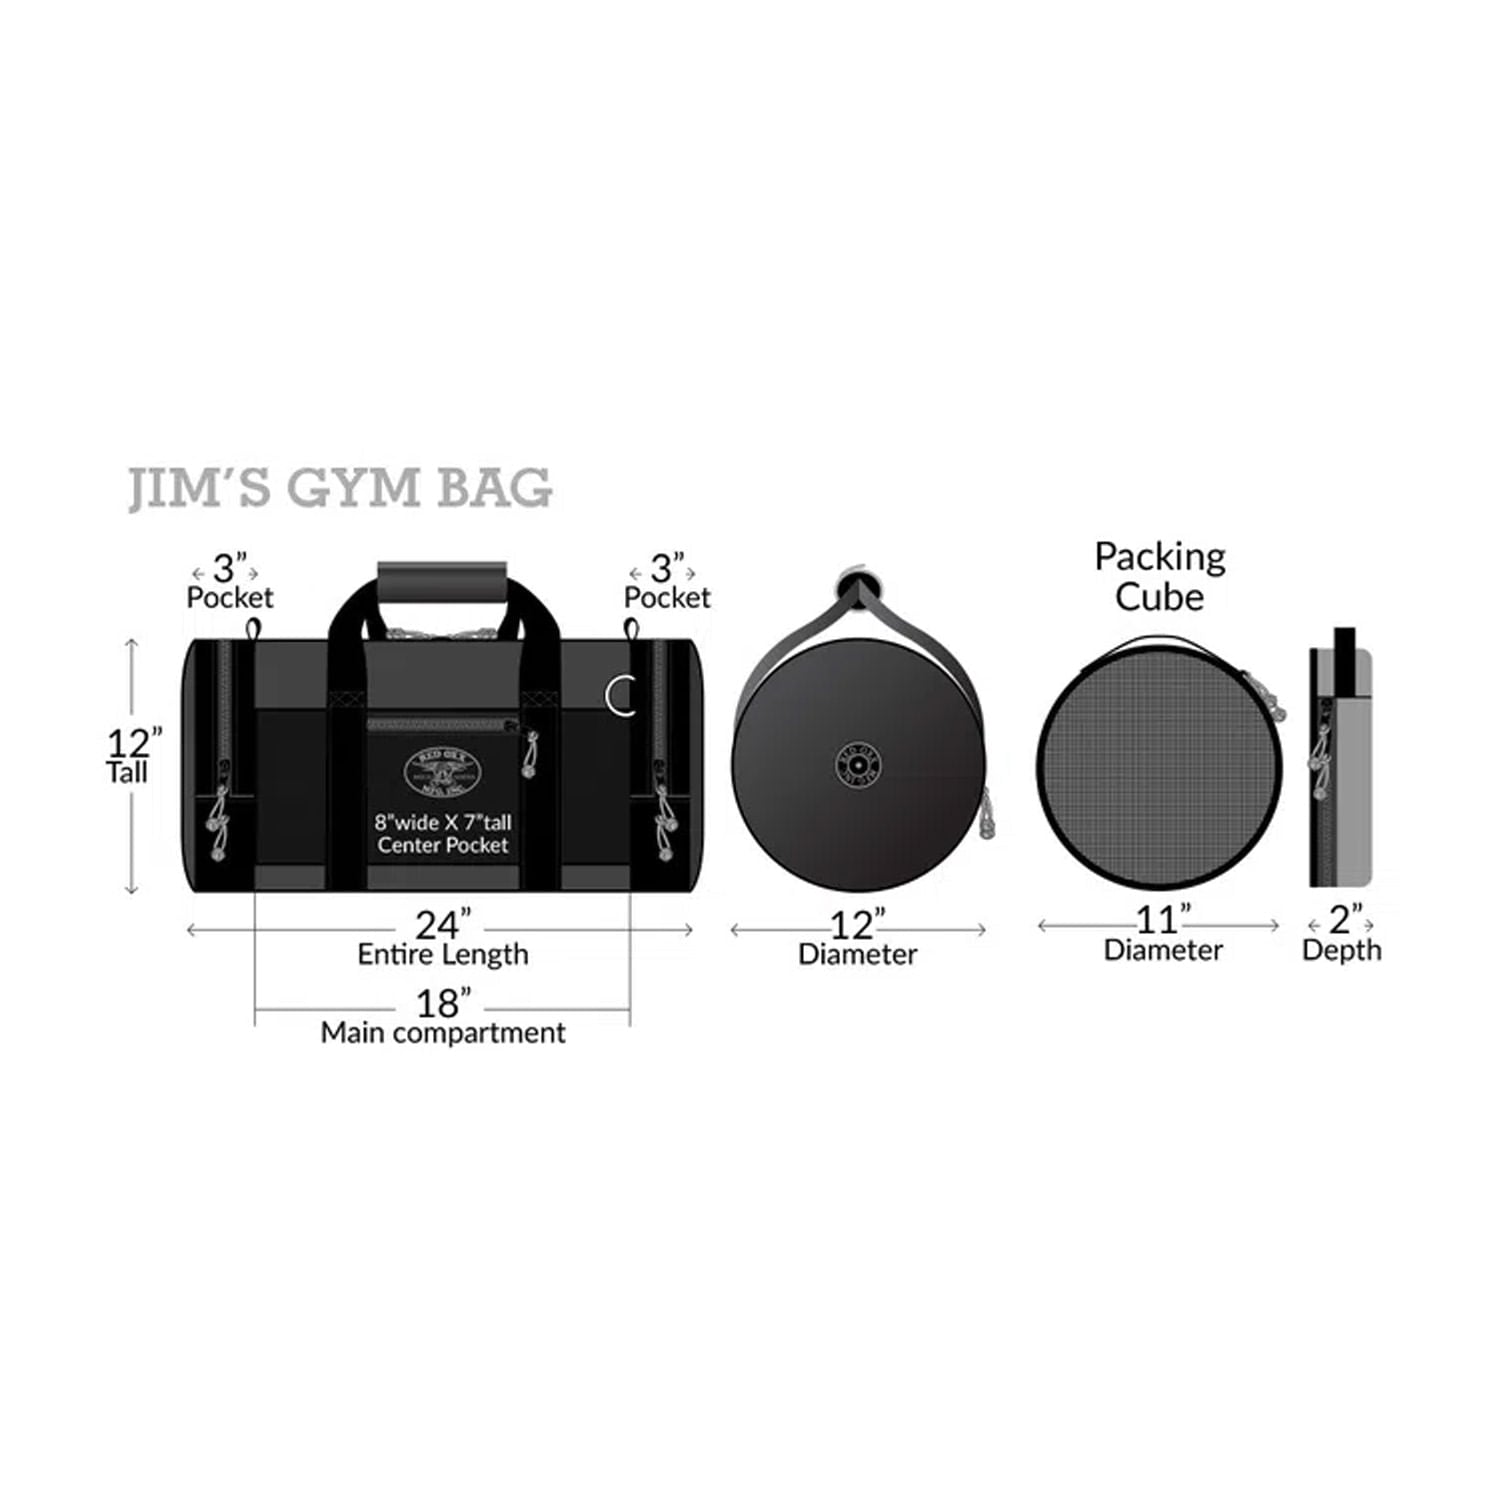 Jims Gym Bag measurements 